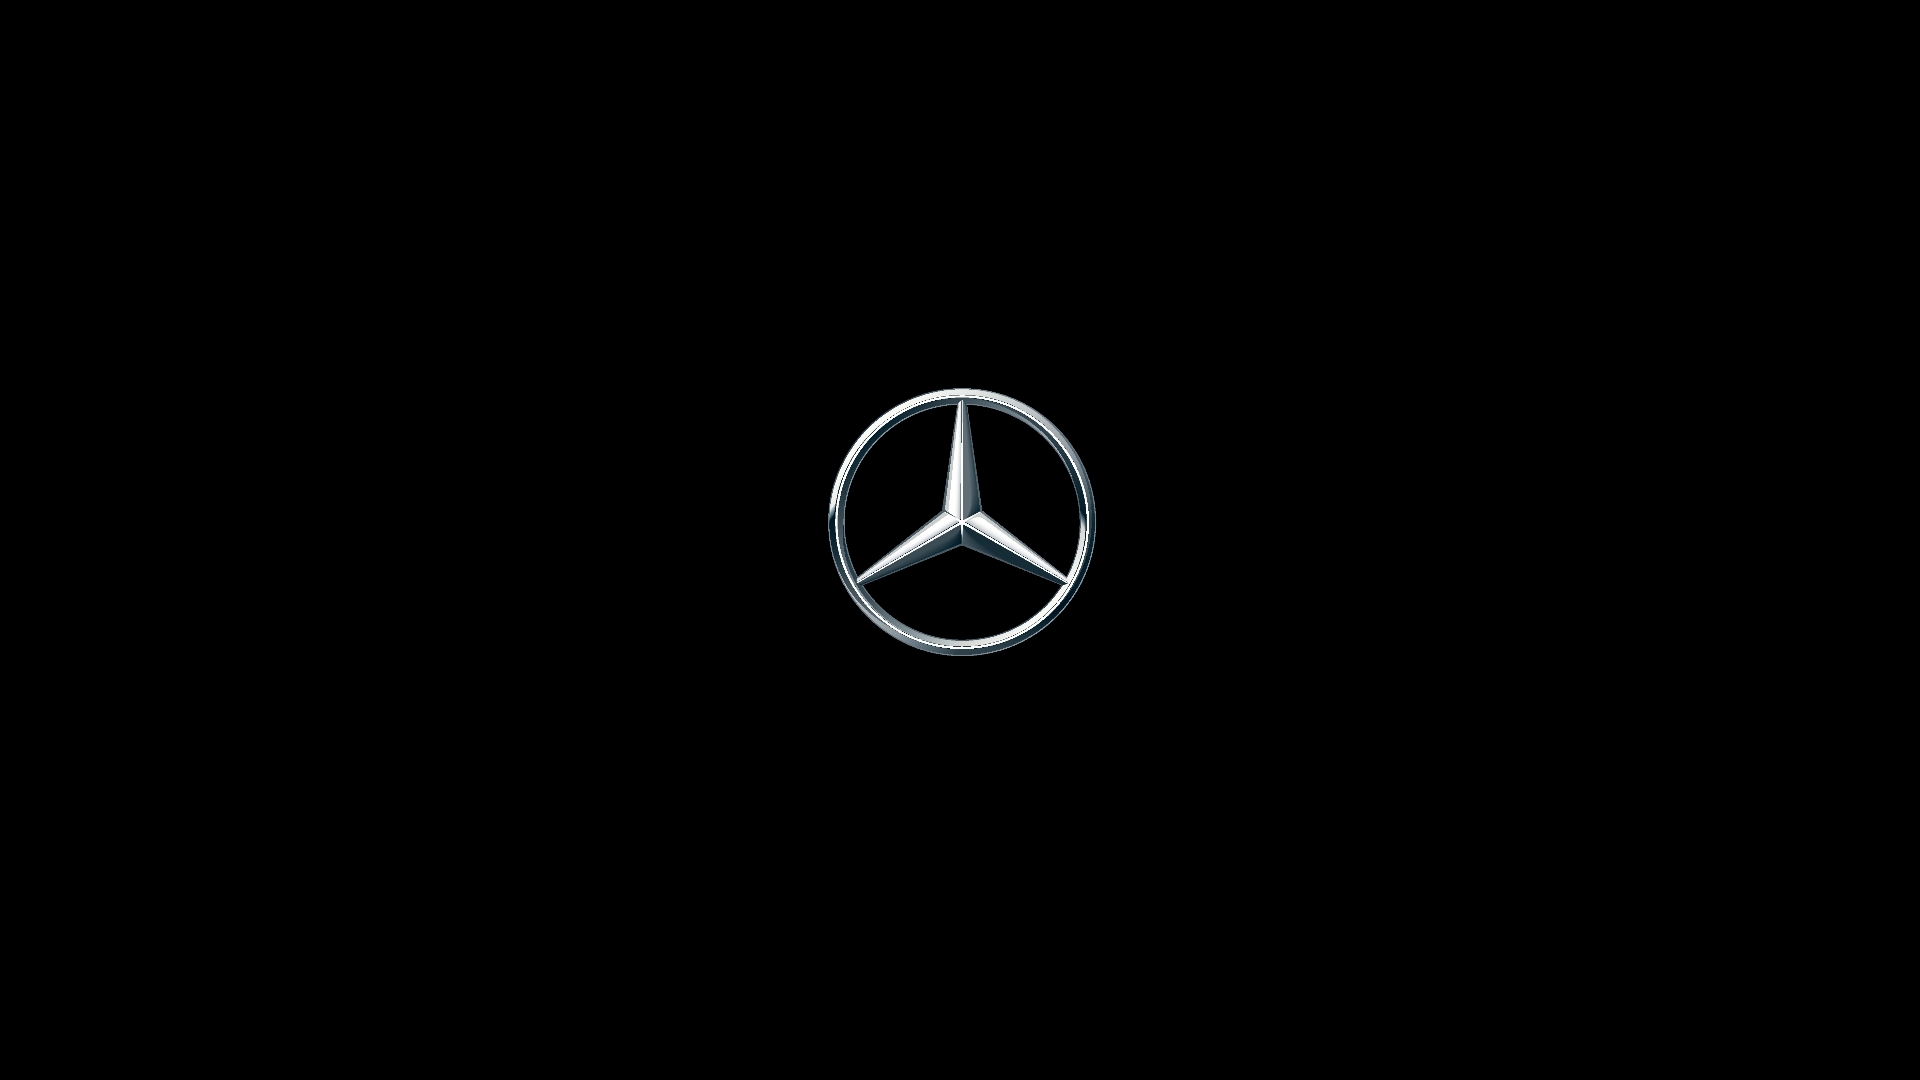 Mercedes logo wallpapers